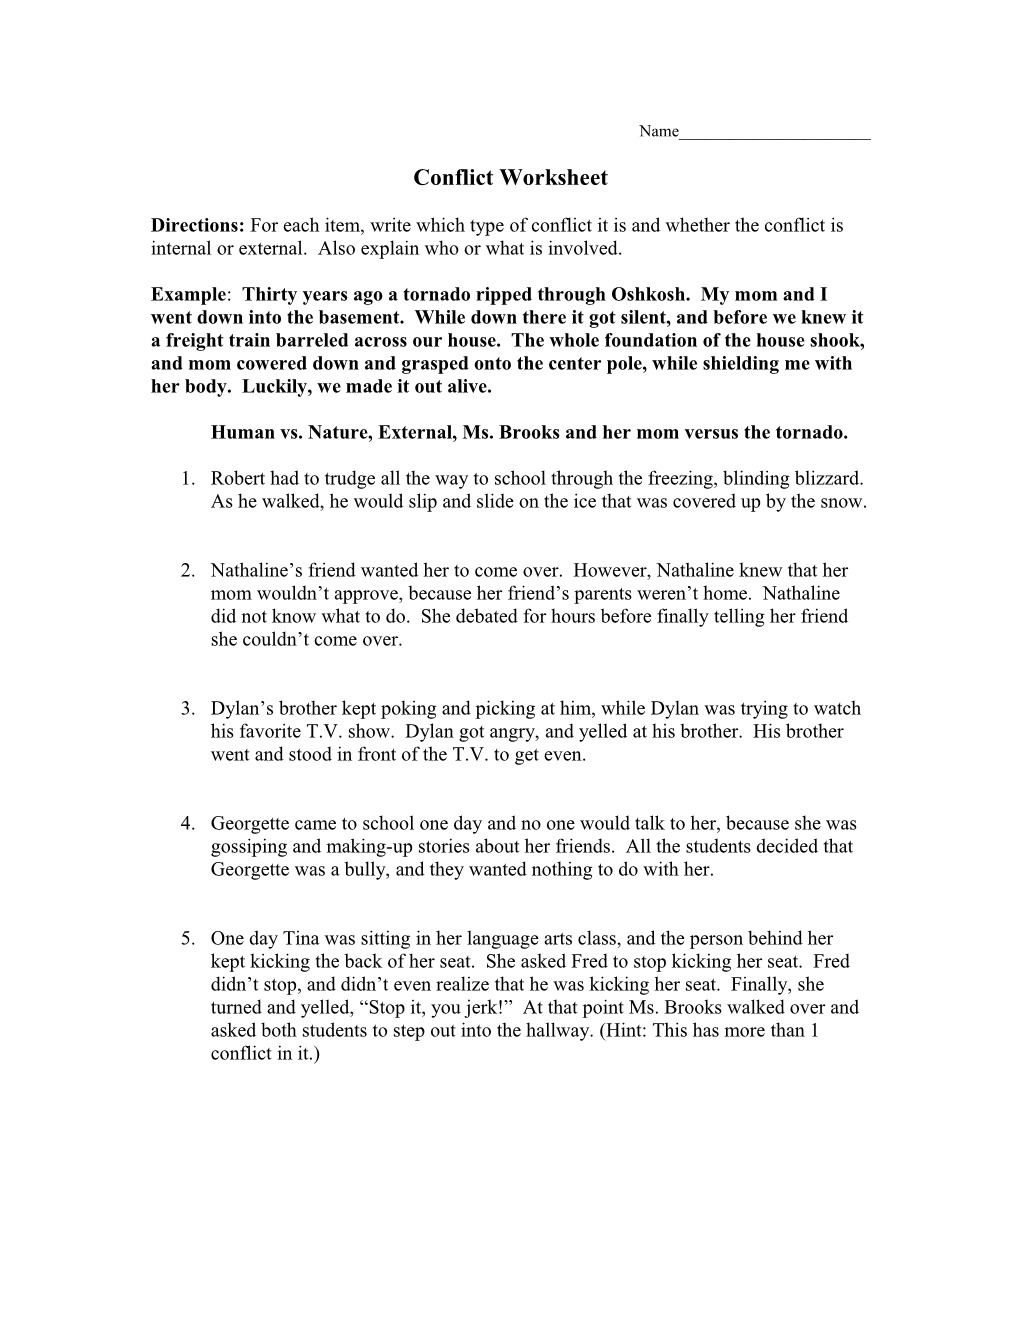 Conflict Worksheet